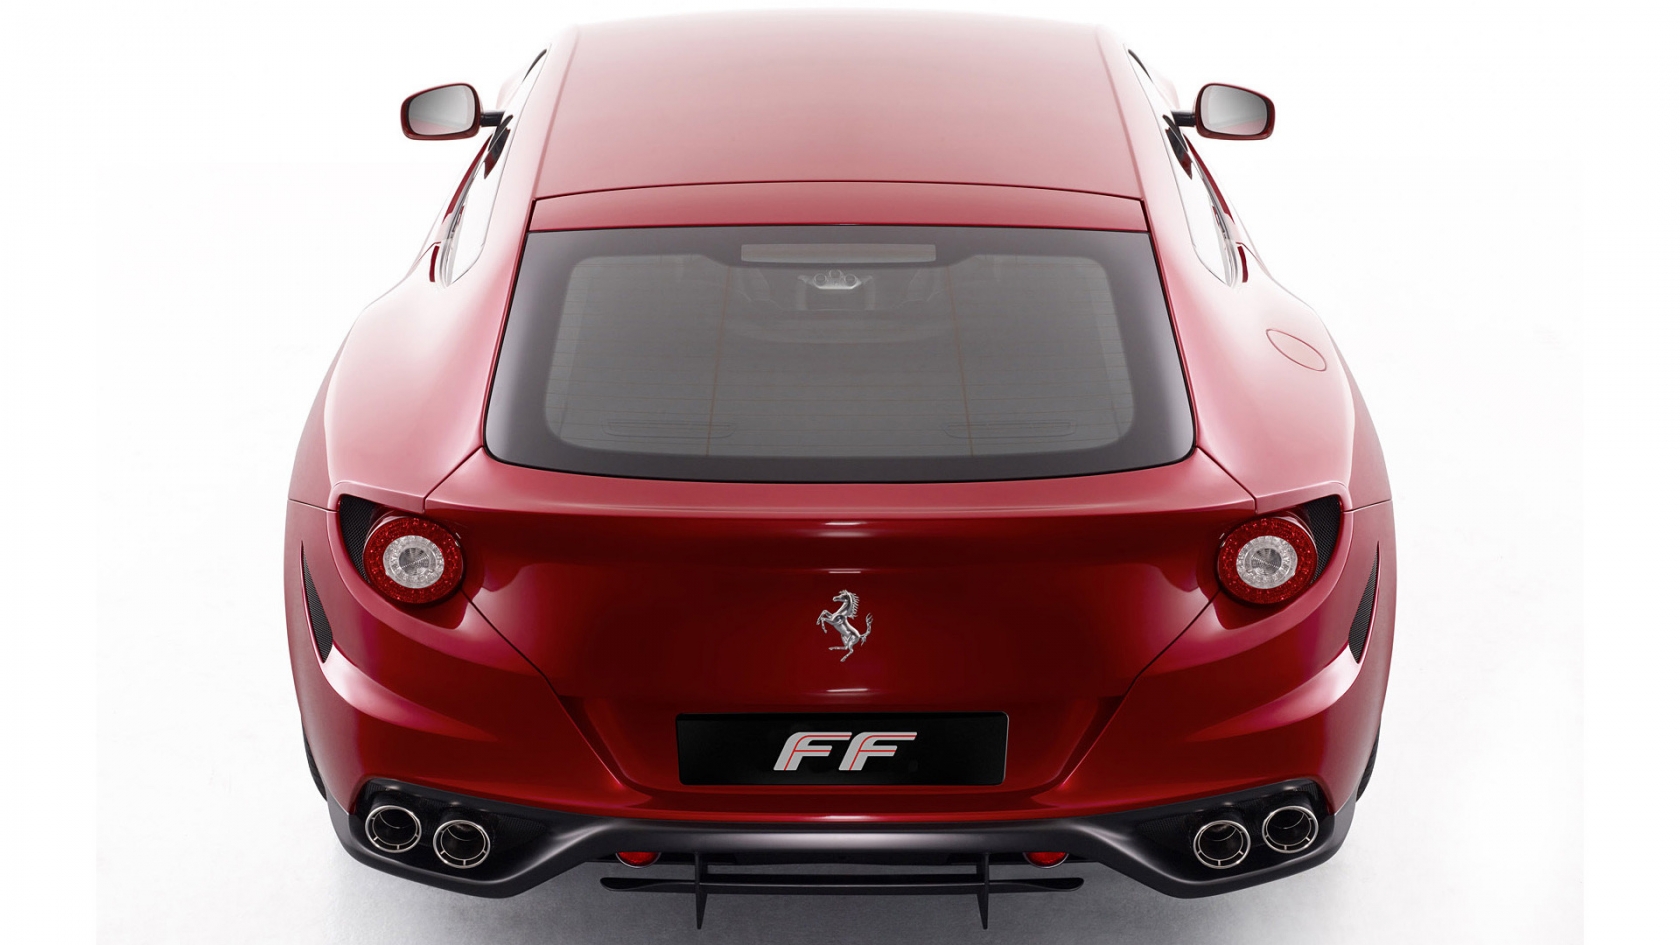 Ferrari FF Rear for 1680 x 945 HDTV resolution